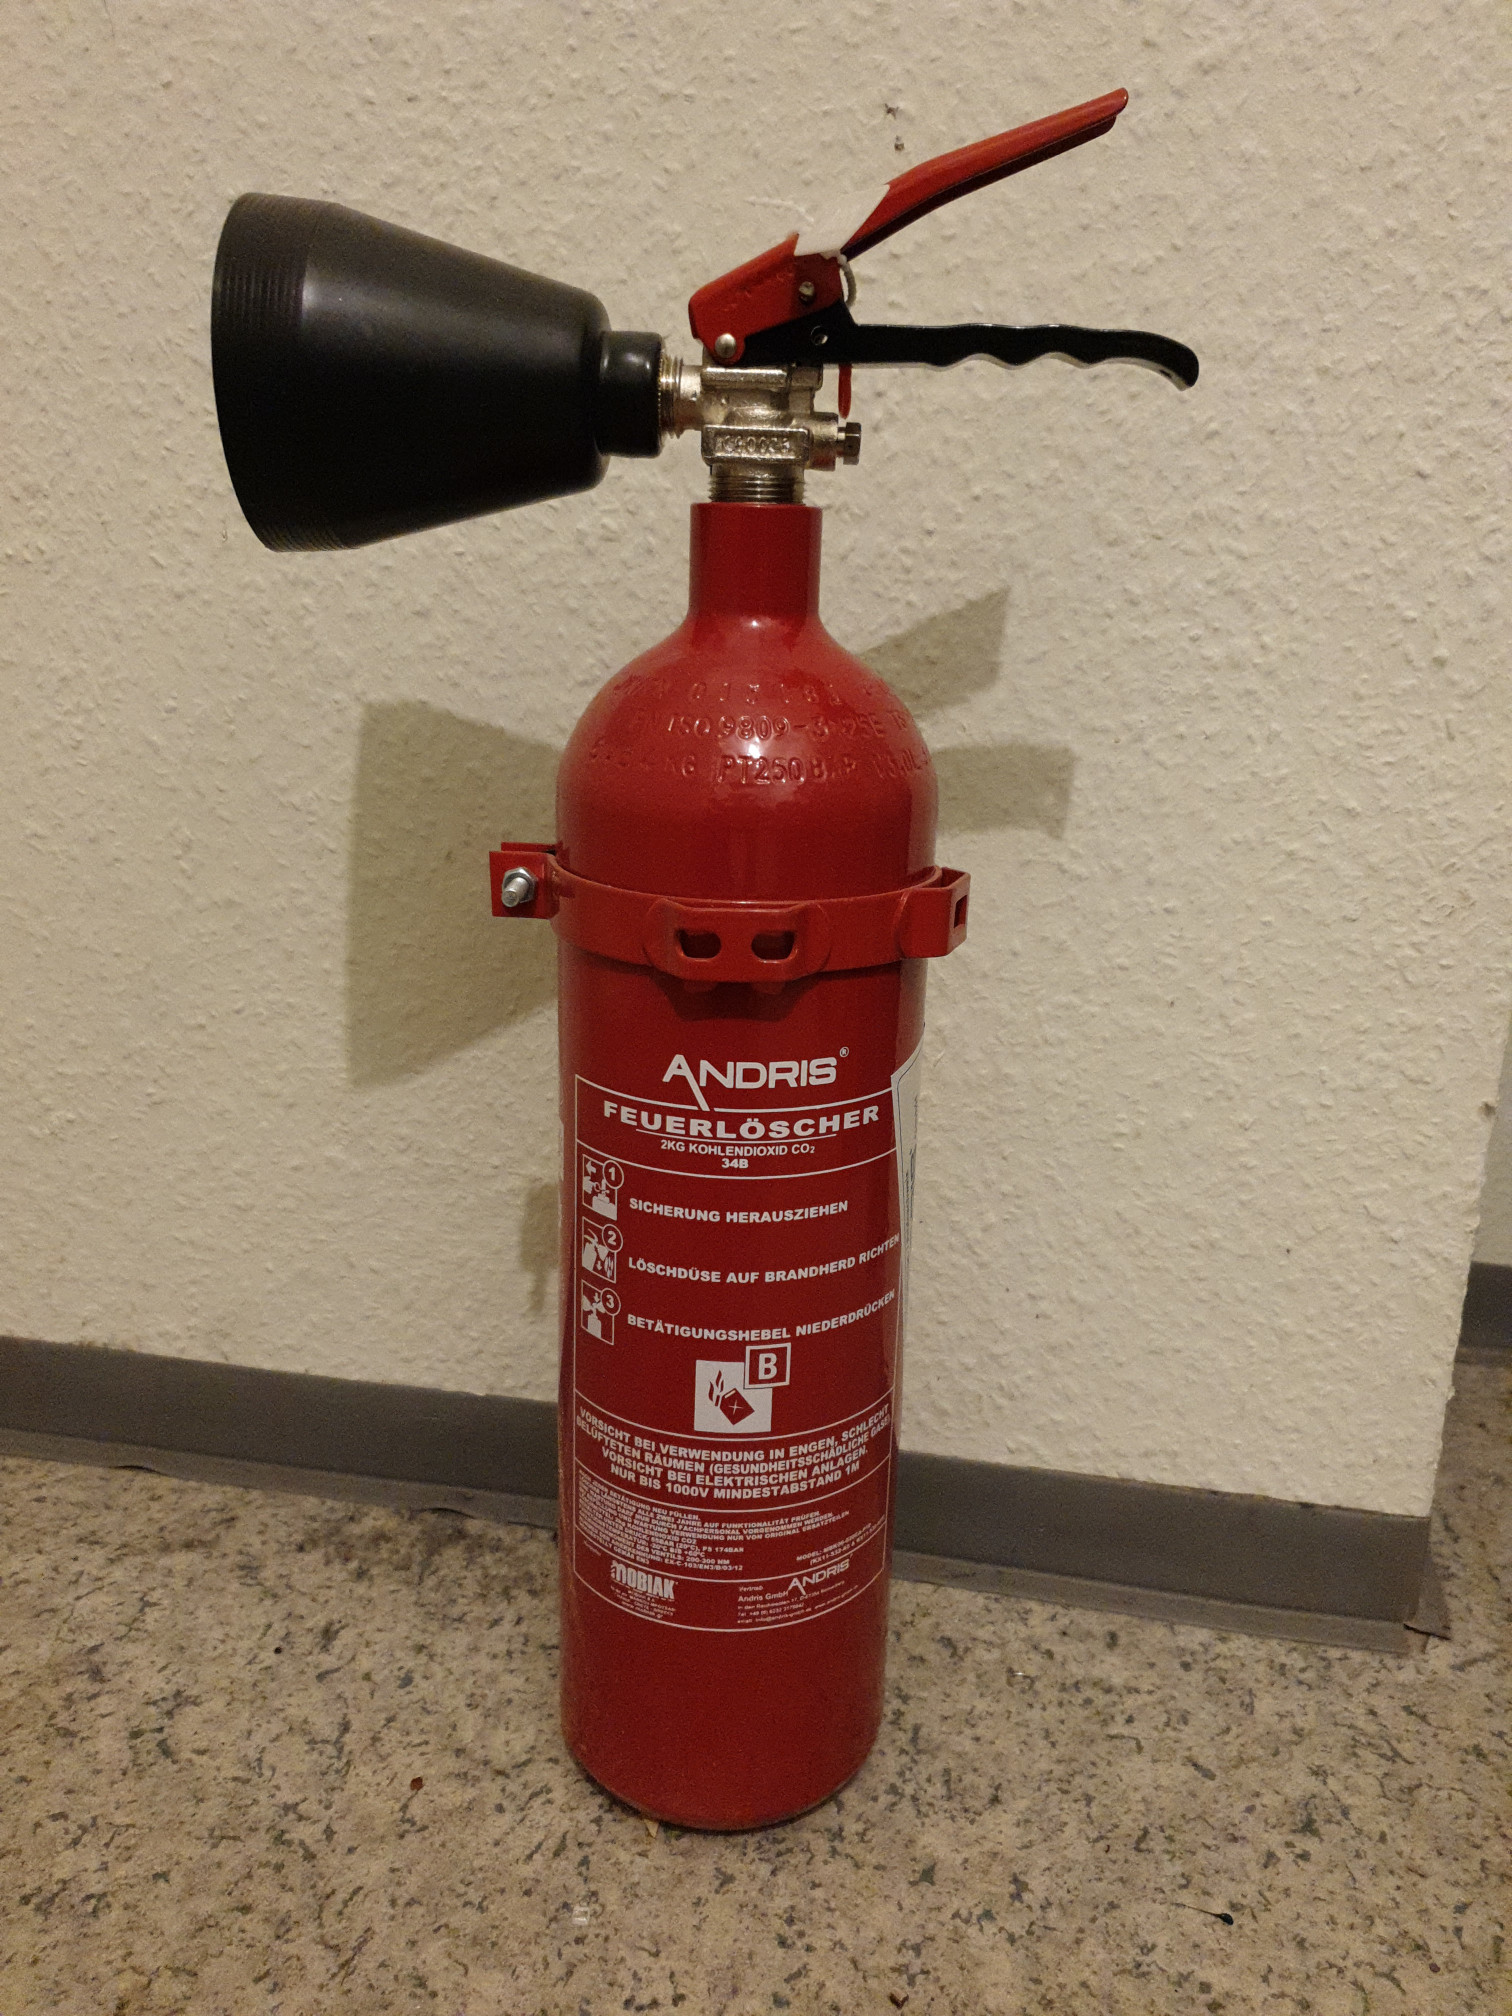 fire-extinguisher_co2.jpg